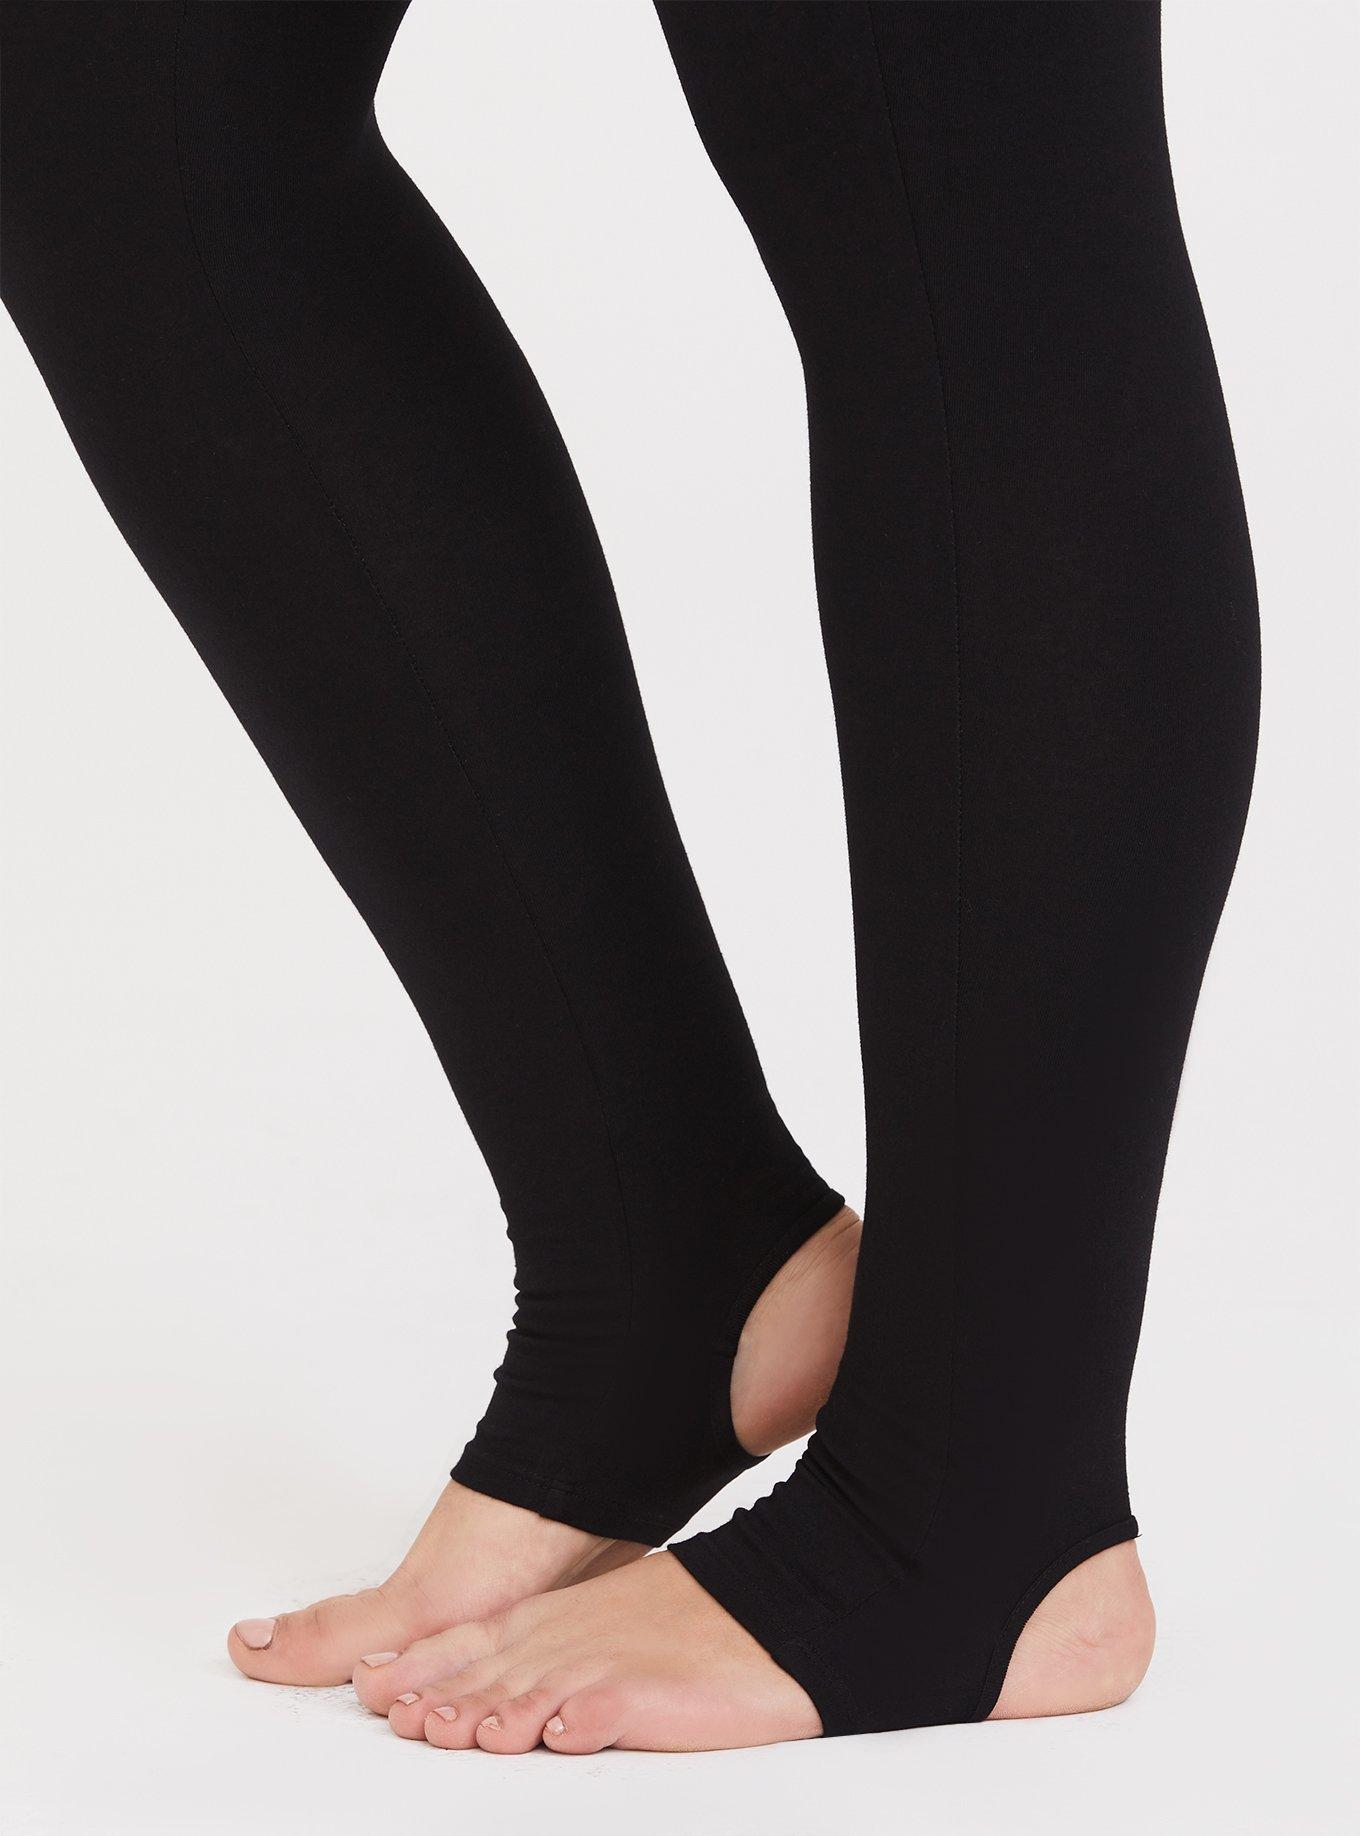 HUE Women's Stirrup Leggings, Black, Large